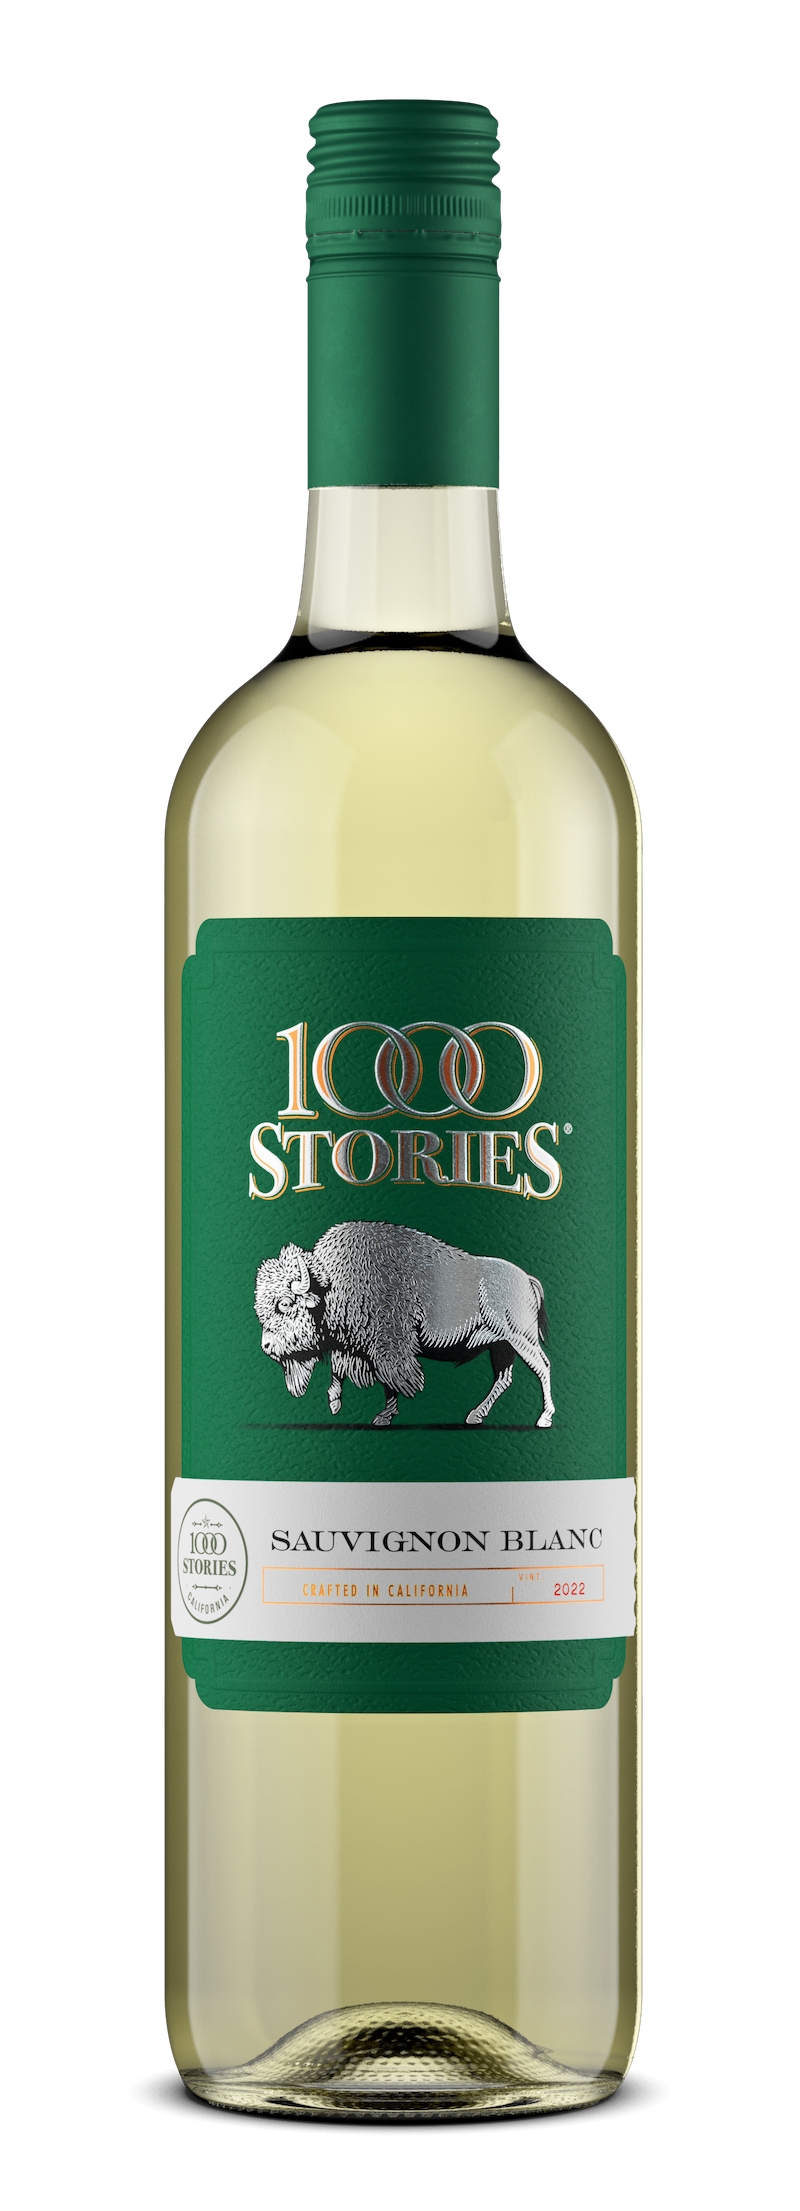 1000 Stories Sauvignon Blanc 2022